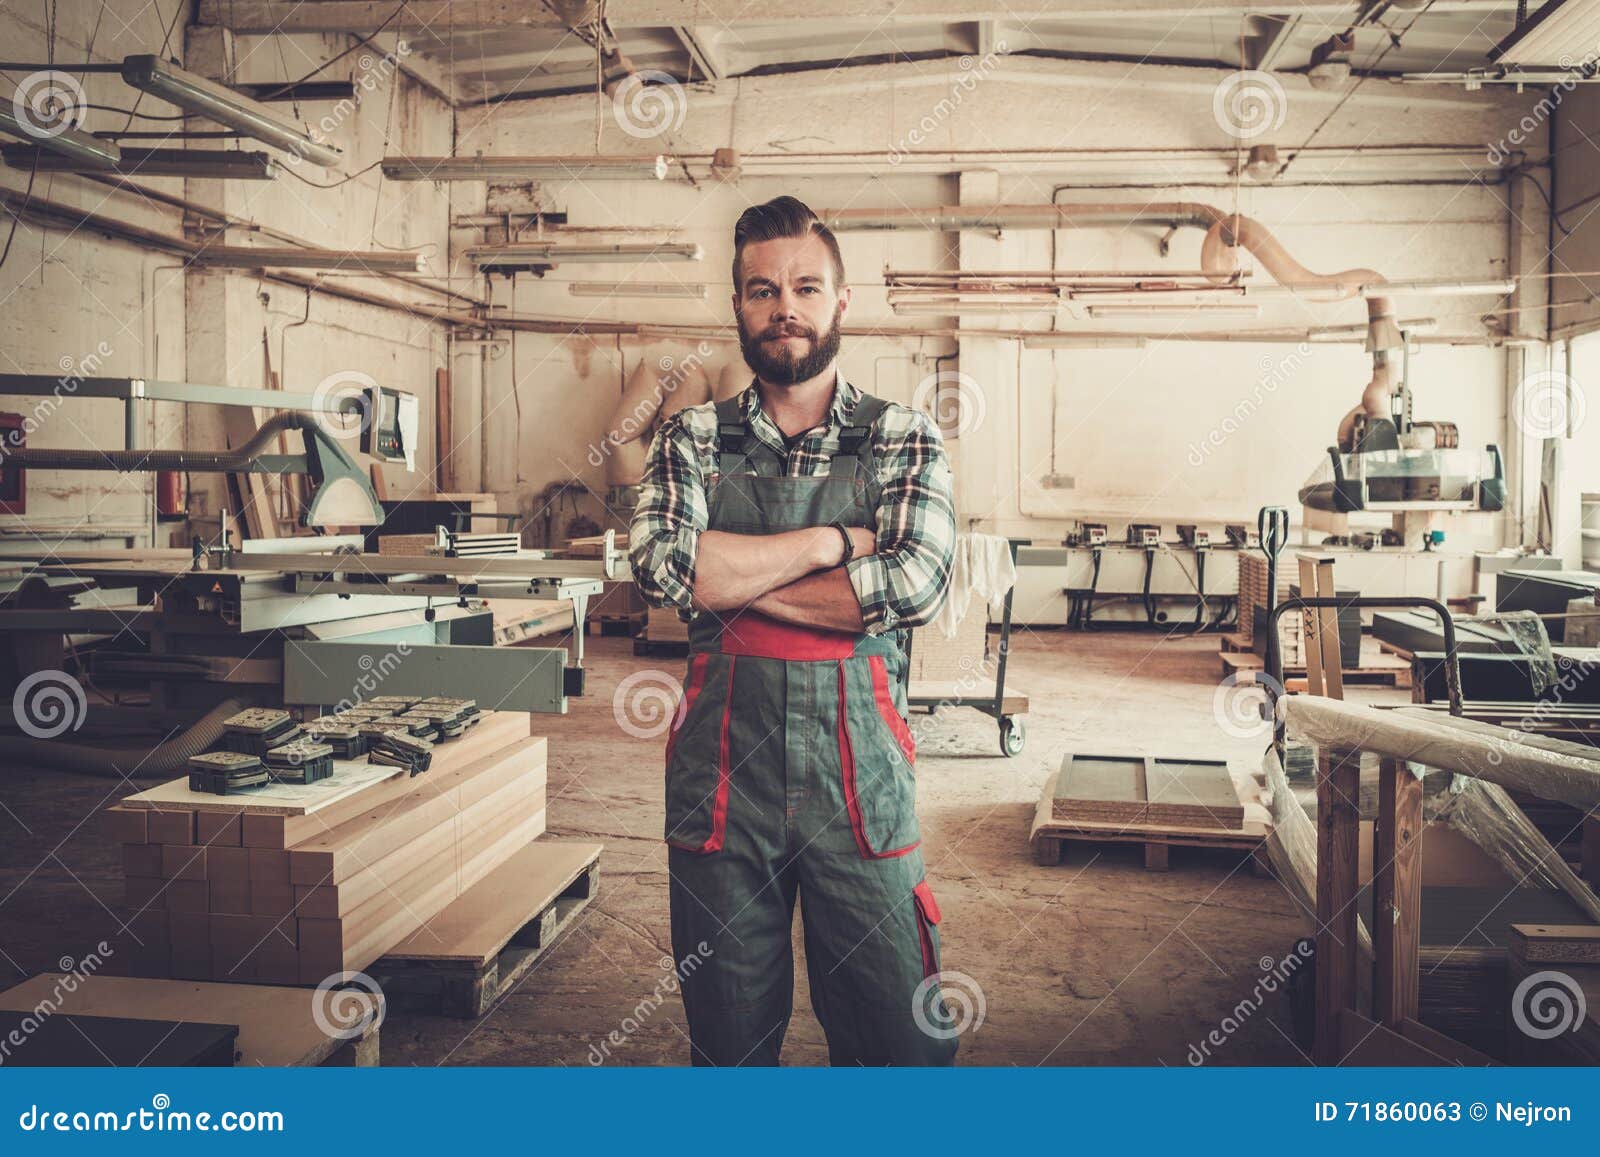 carpenter doing his work in carpentry workshop.